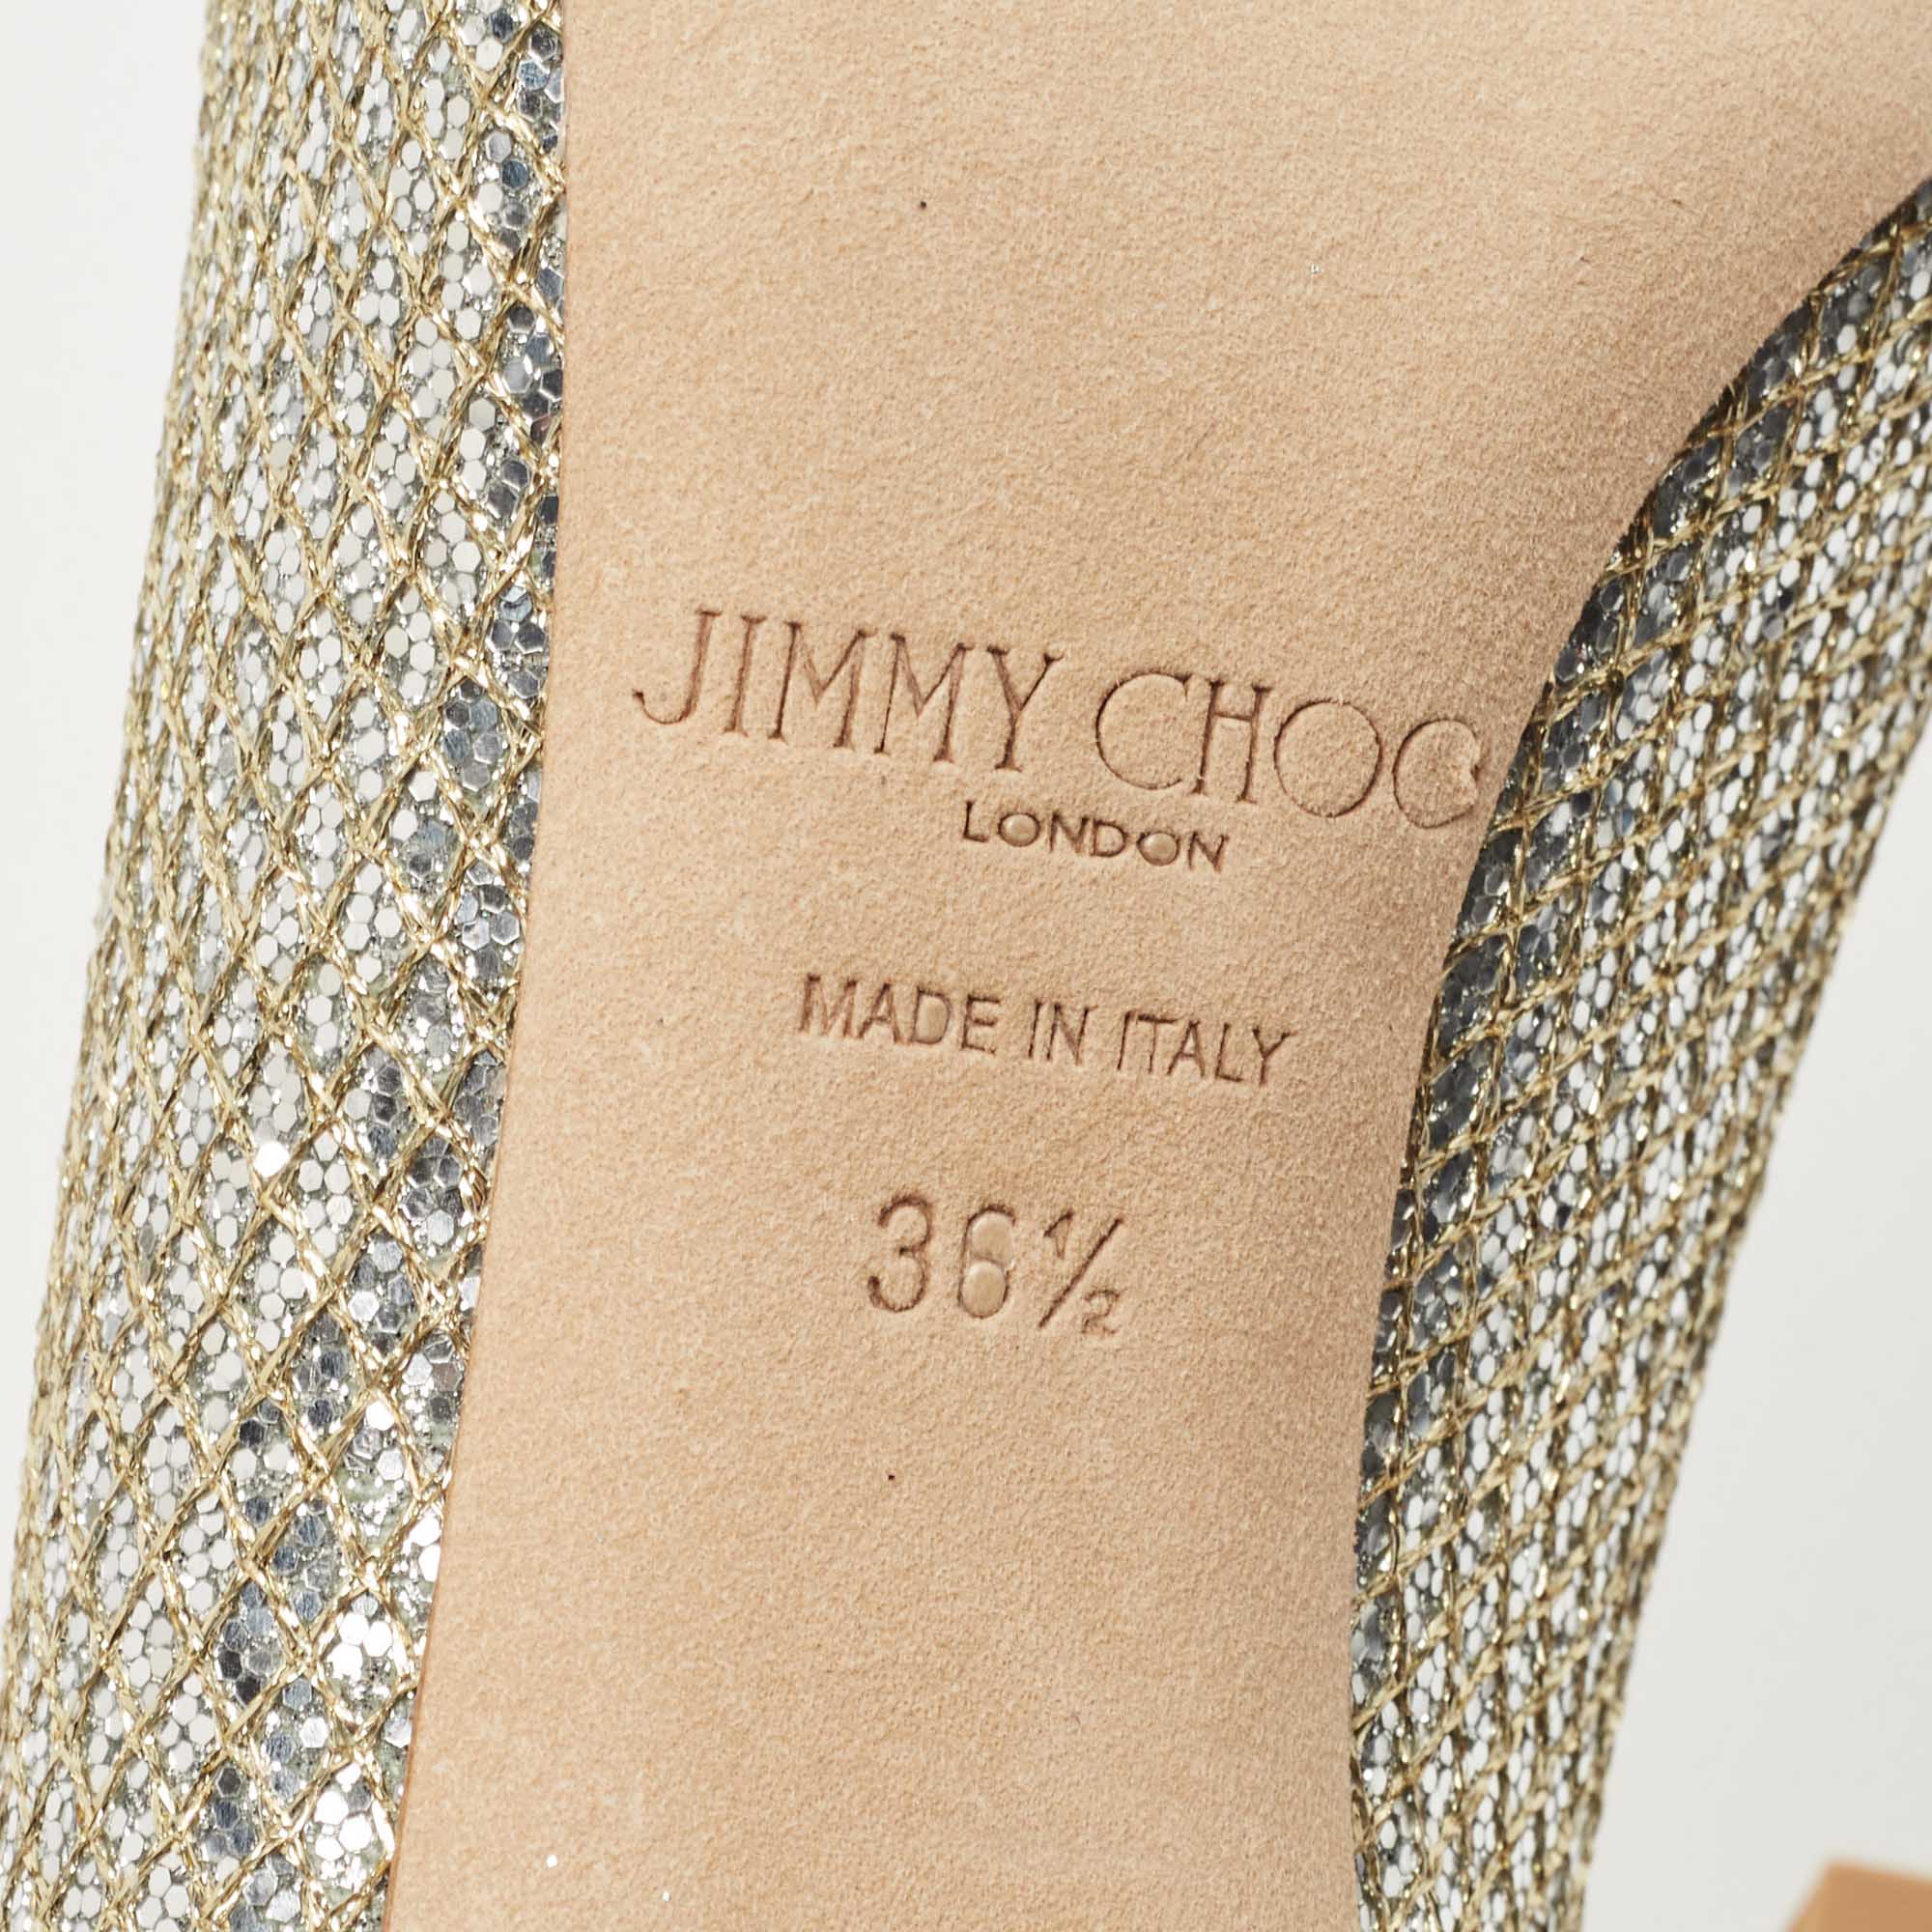 Jimmy Choo Silver Glitter Romy Pointed Toe Pumps Size 36.5